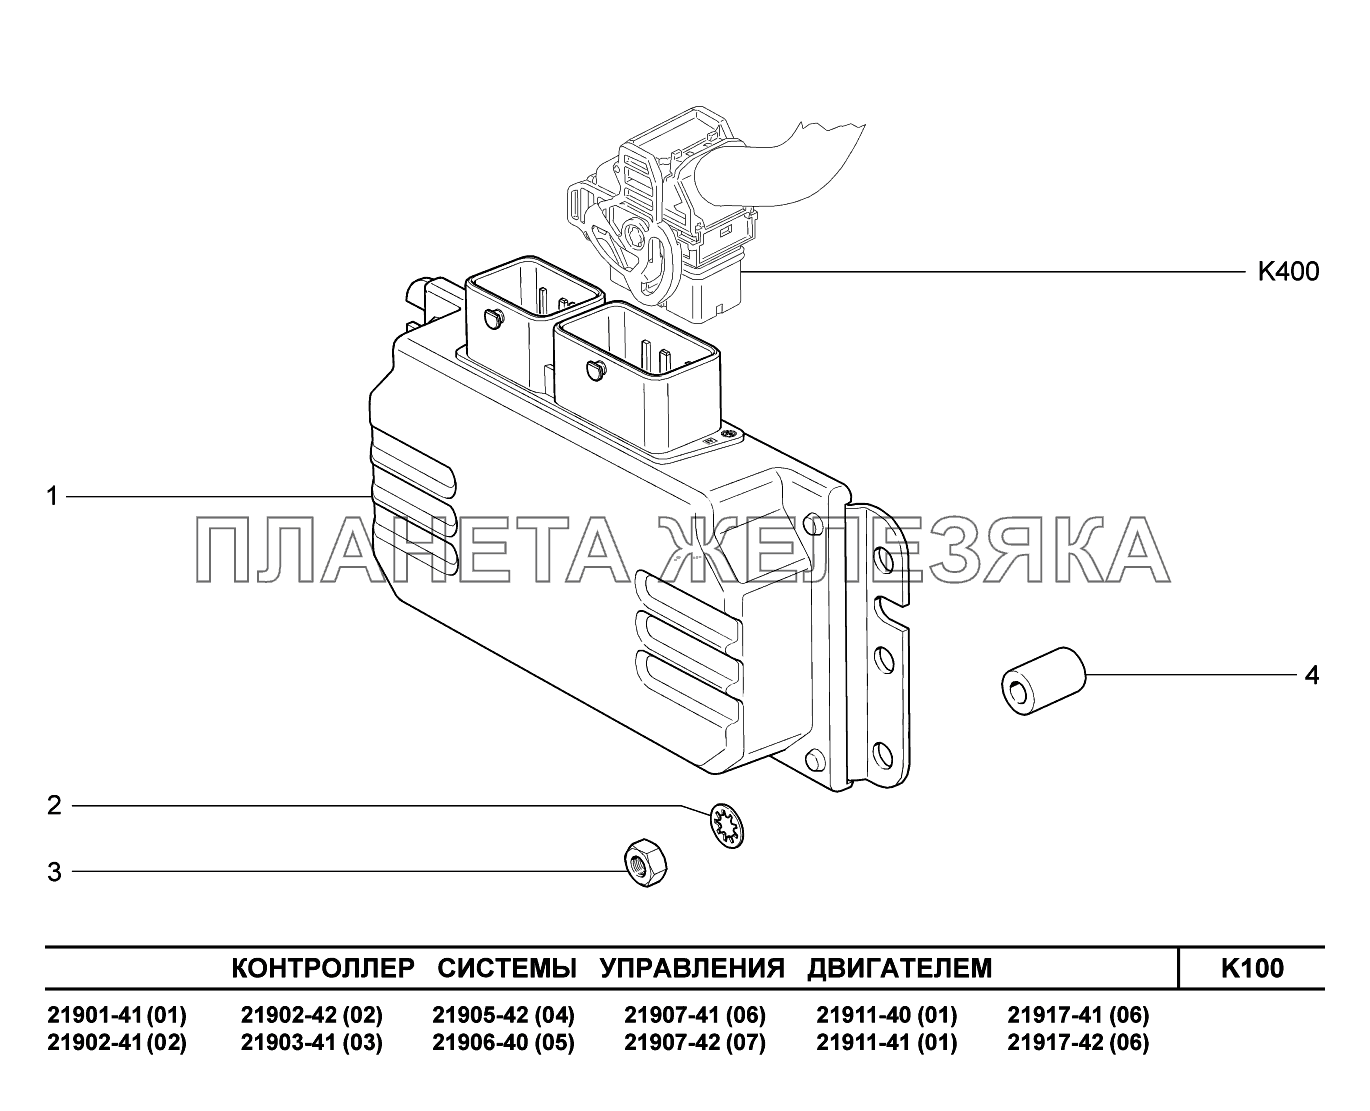 K100. Контроллеры Lada Granta-2190